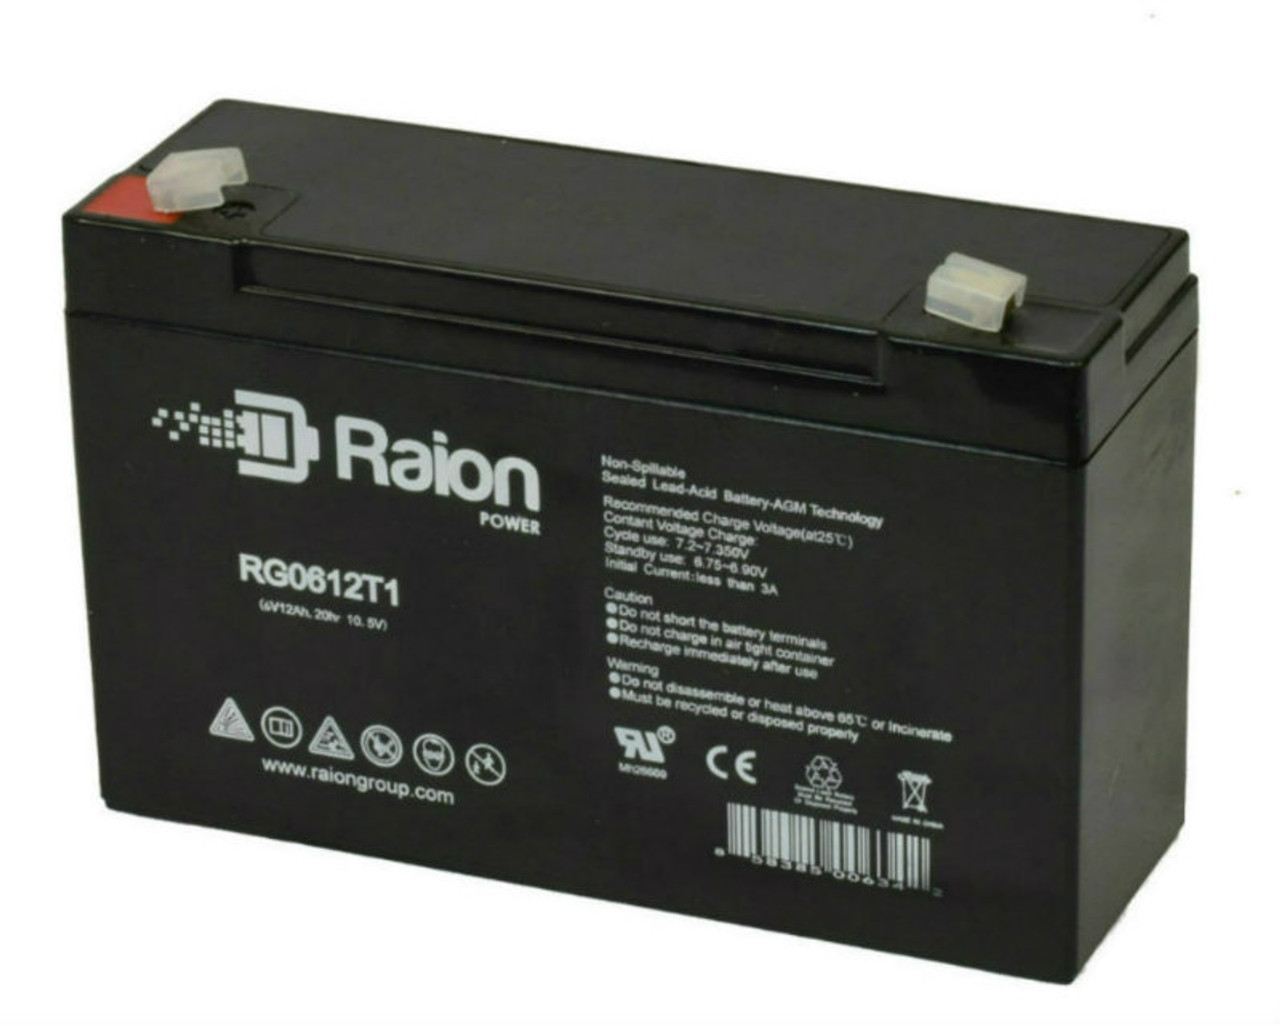 Raion Power RG06120T1 Replacement 6V 12Ah Emergency Light Battery for Teledyne S68